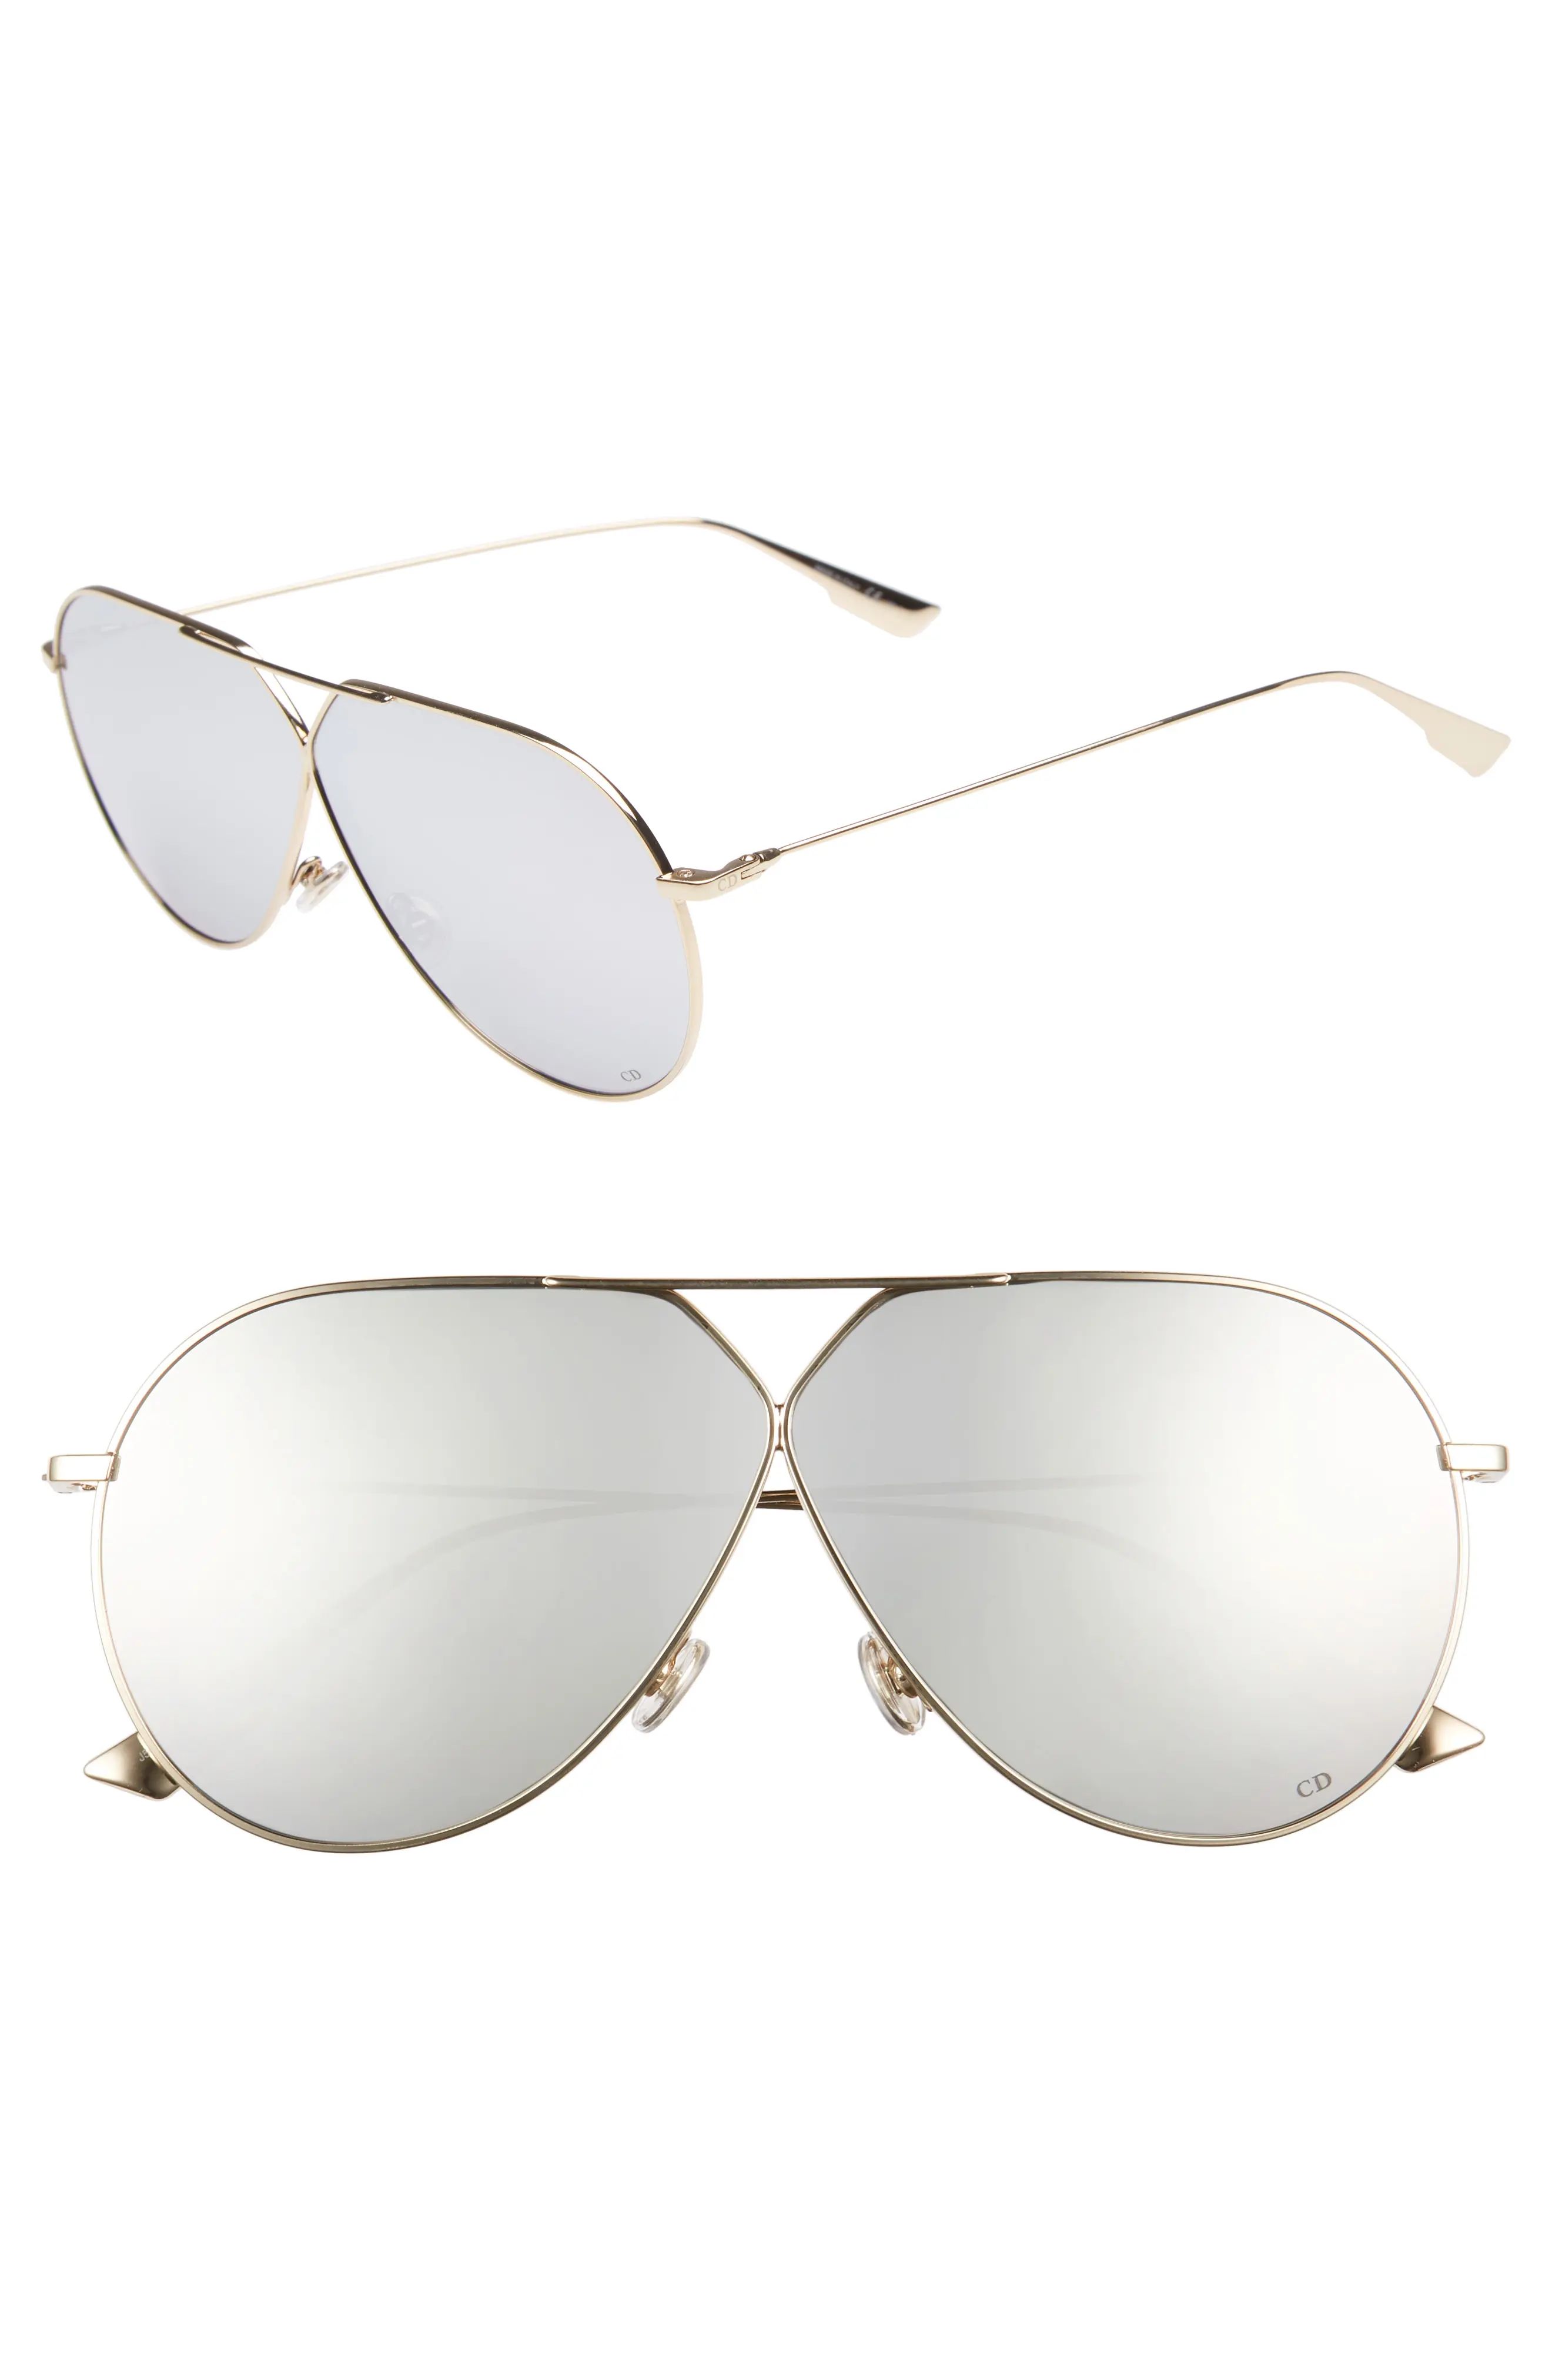 Dior 65mm Stell Sunglasses at Nordstrom Rack | Nordstrom Rack